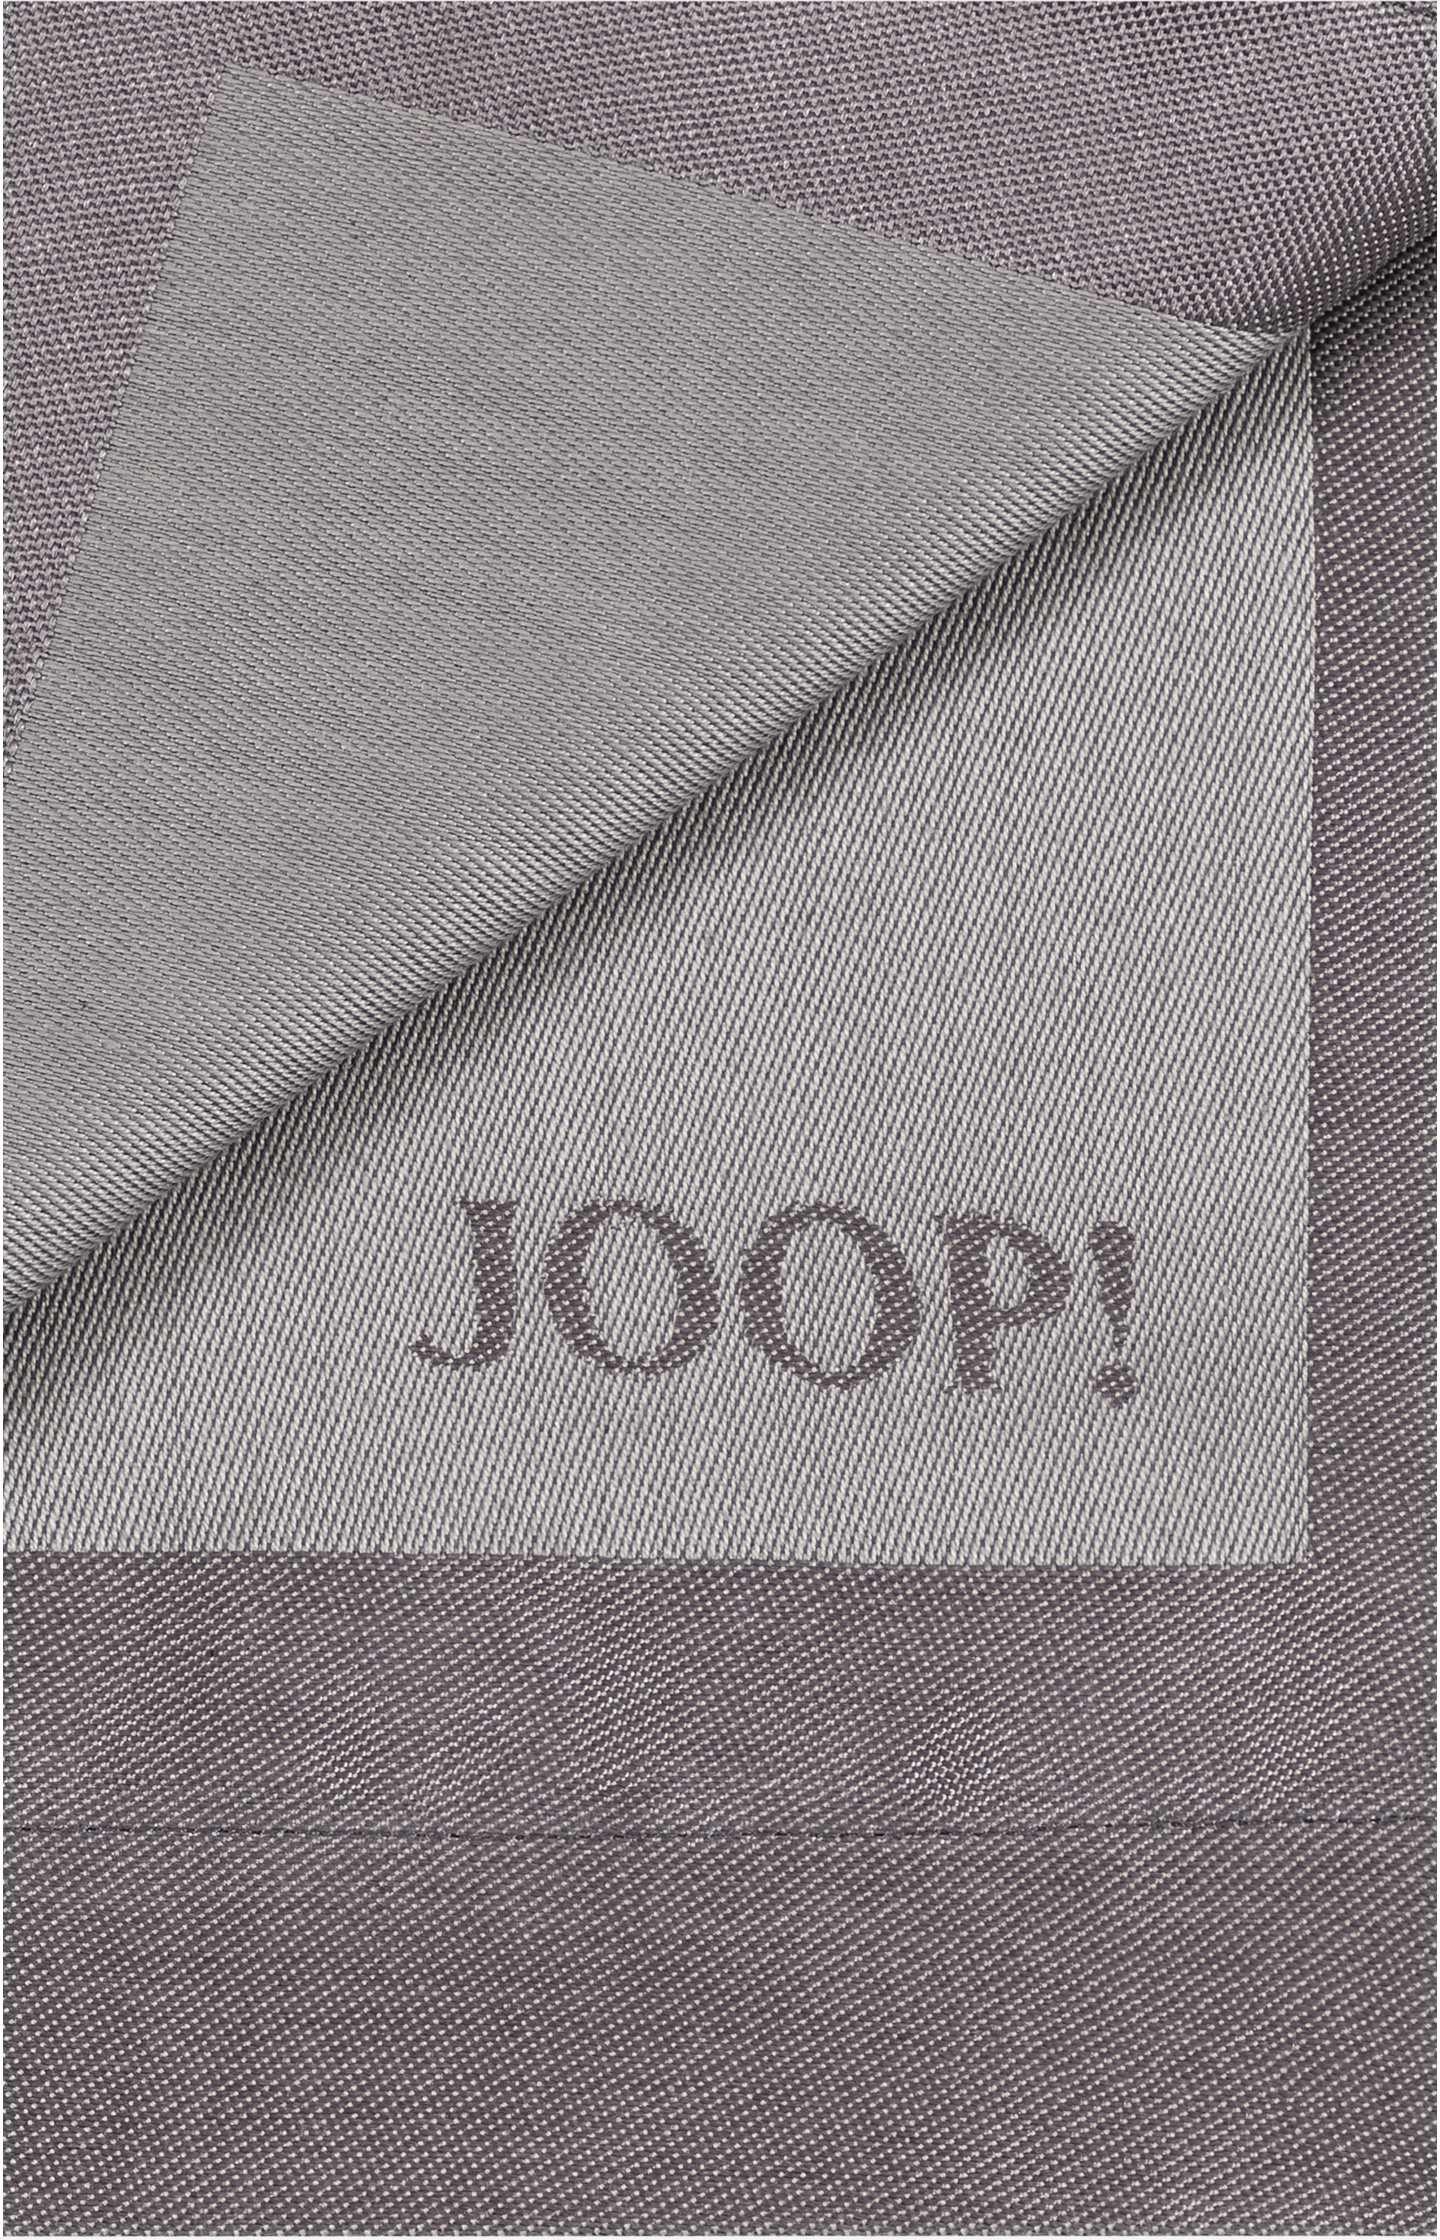 Tischläufer JOOP! Signature in Platin, 50 x 160 cm - im JOOP! Online-Shop